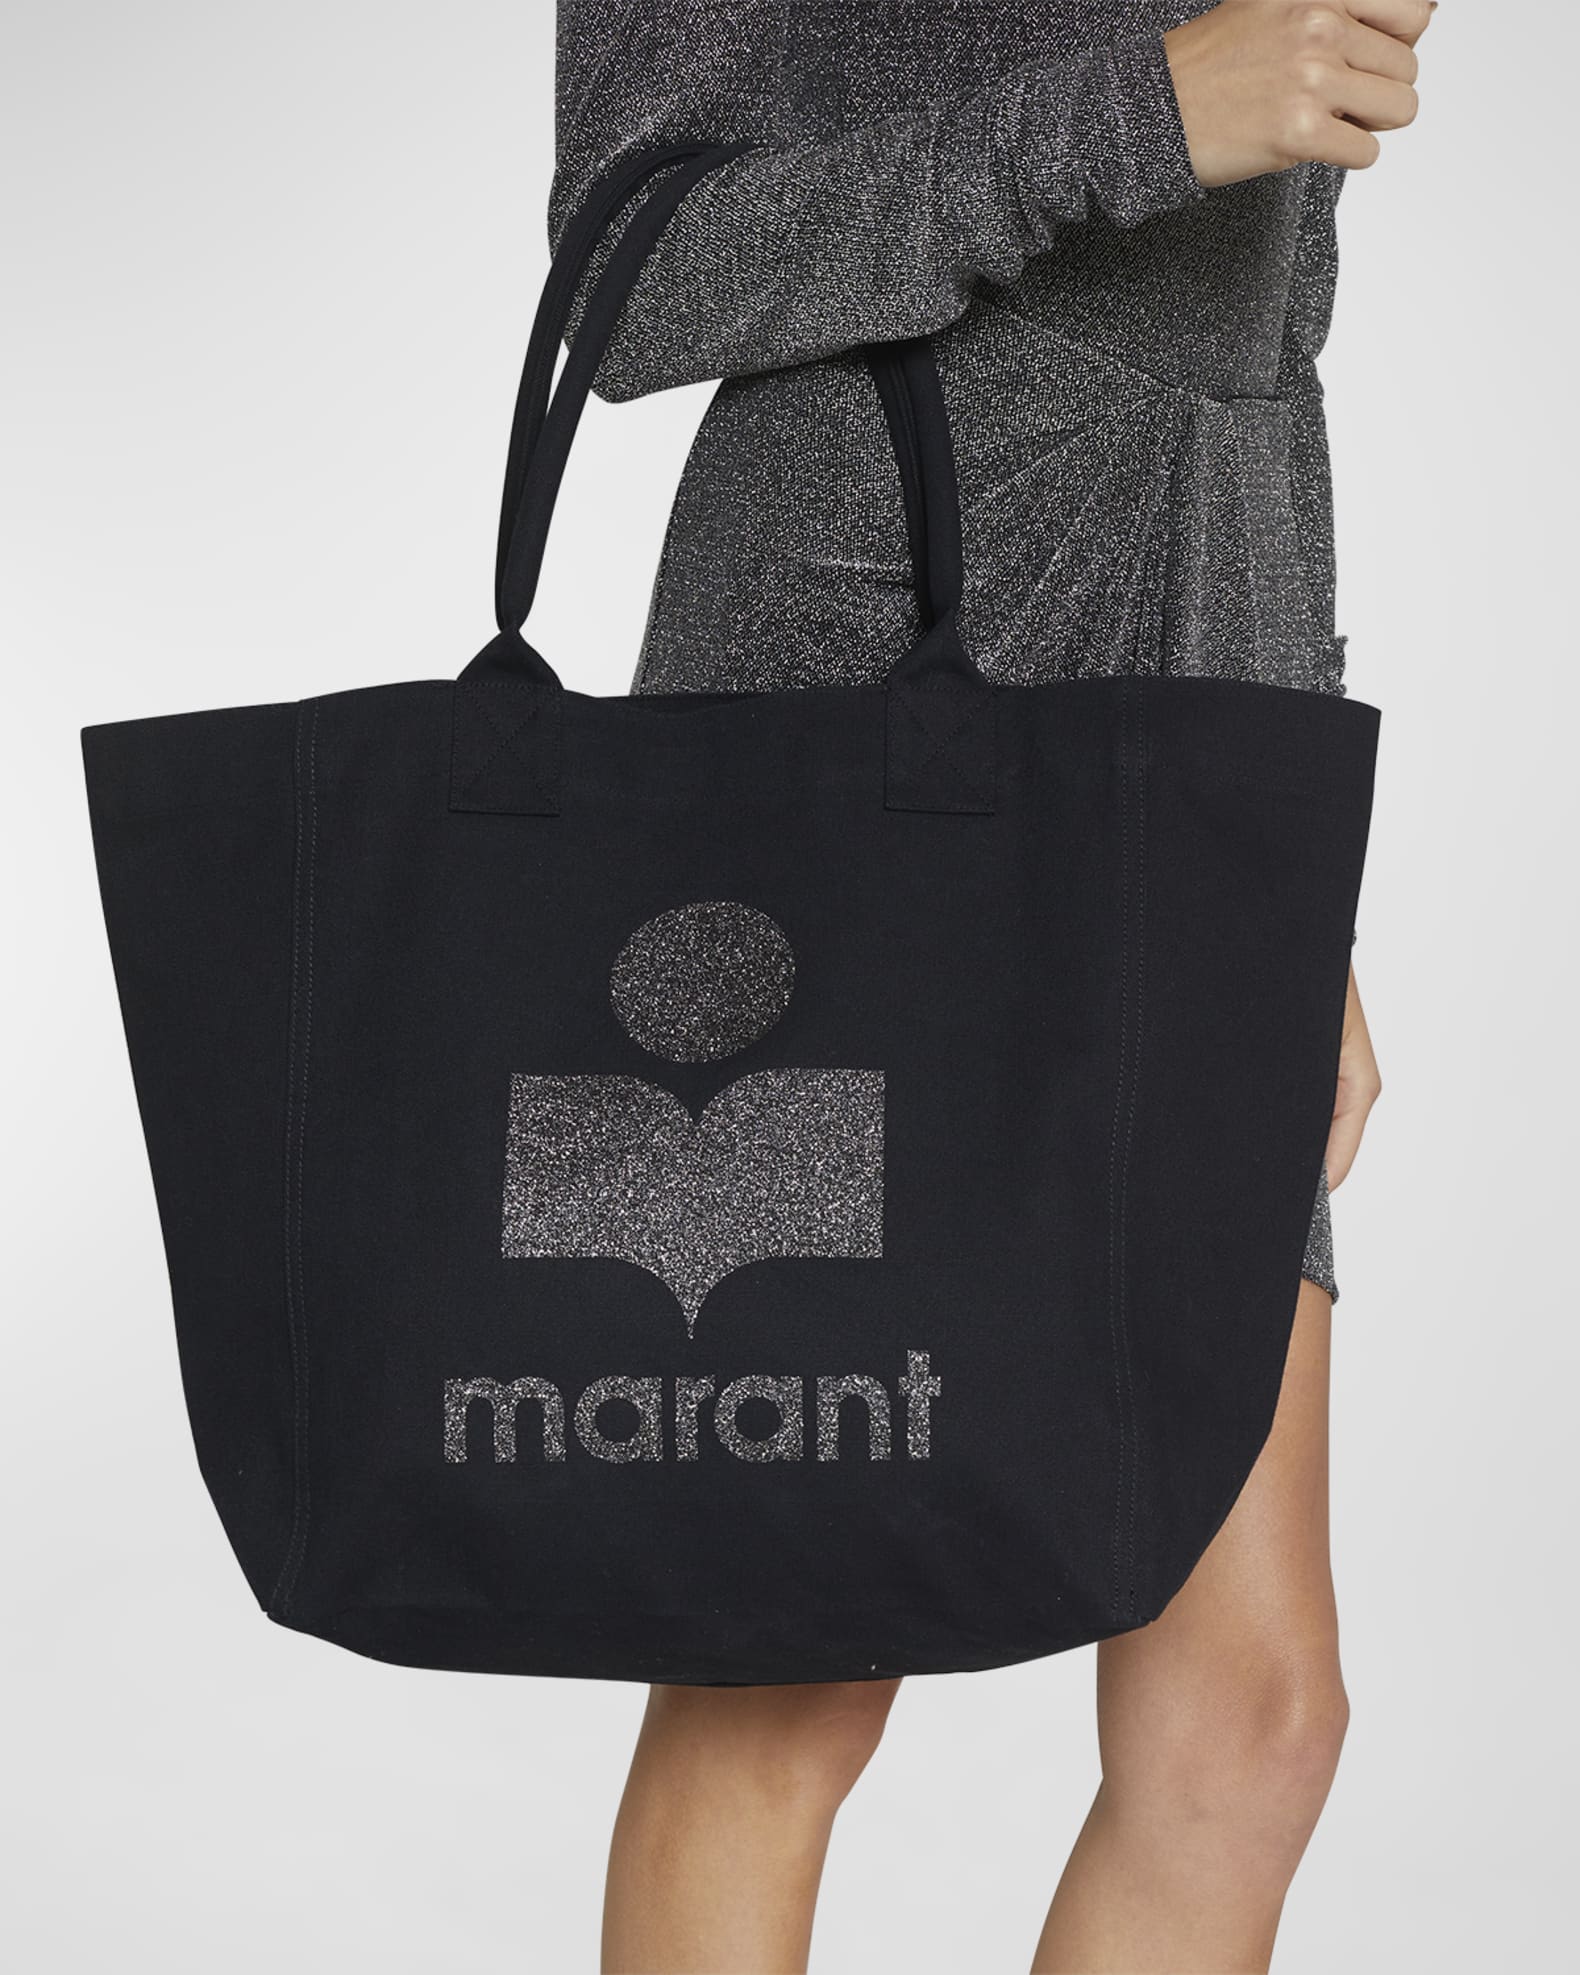 Nat sted marv Orator Isabel Marant Yenky Glitter Logo Canvas Tote Bag | Neiman Marcus